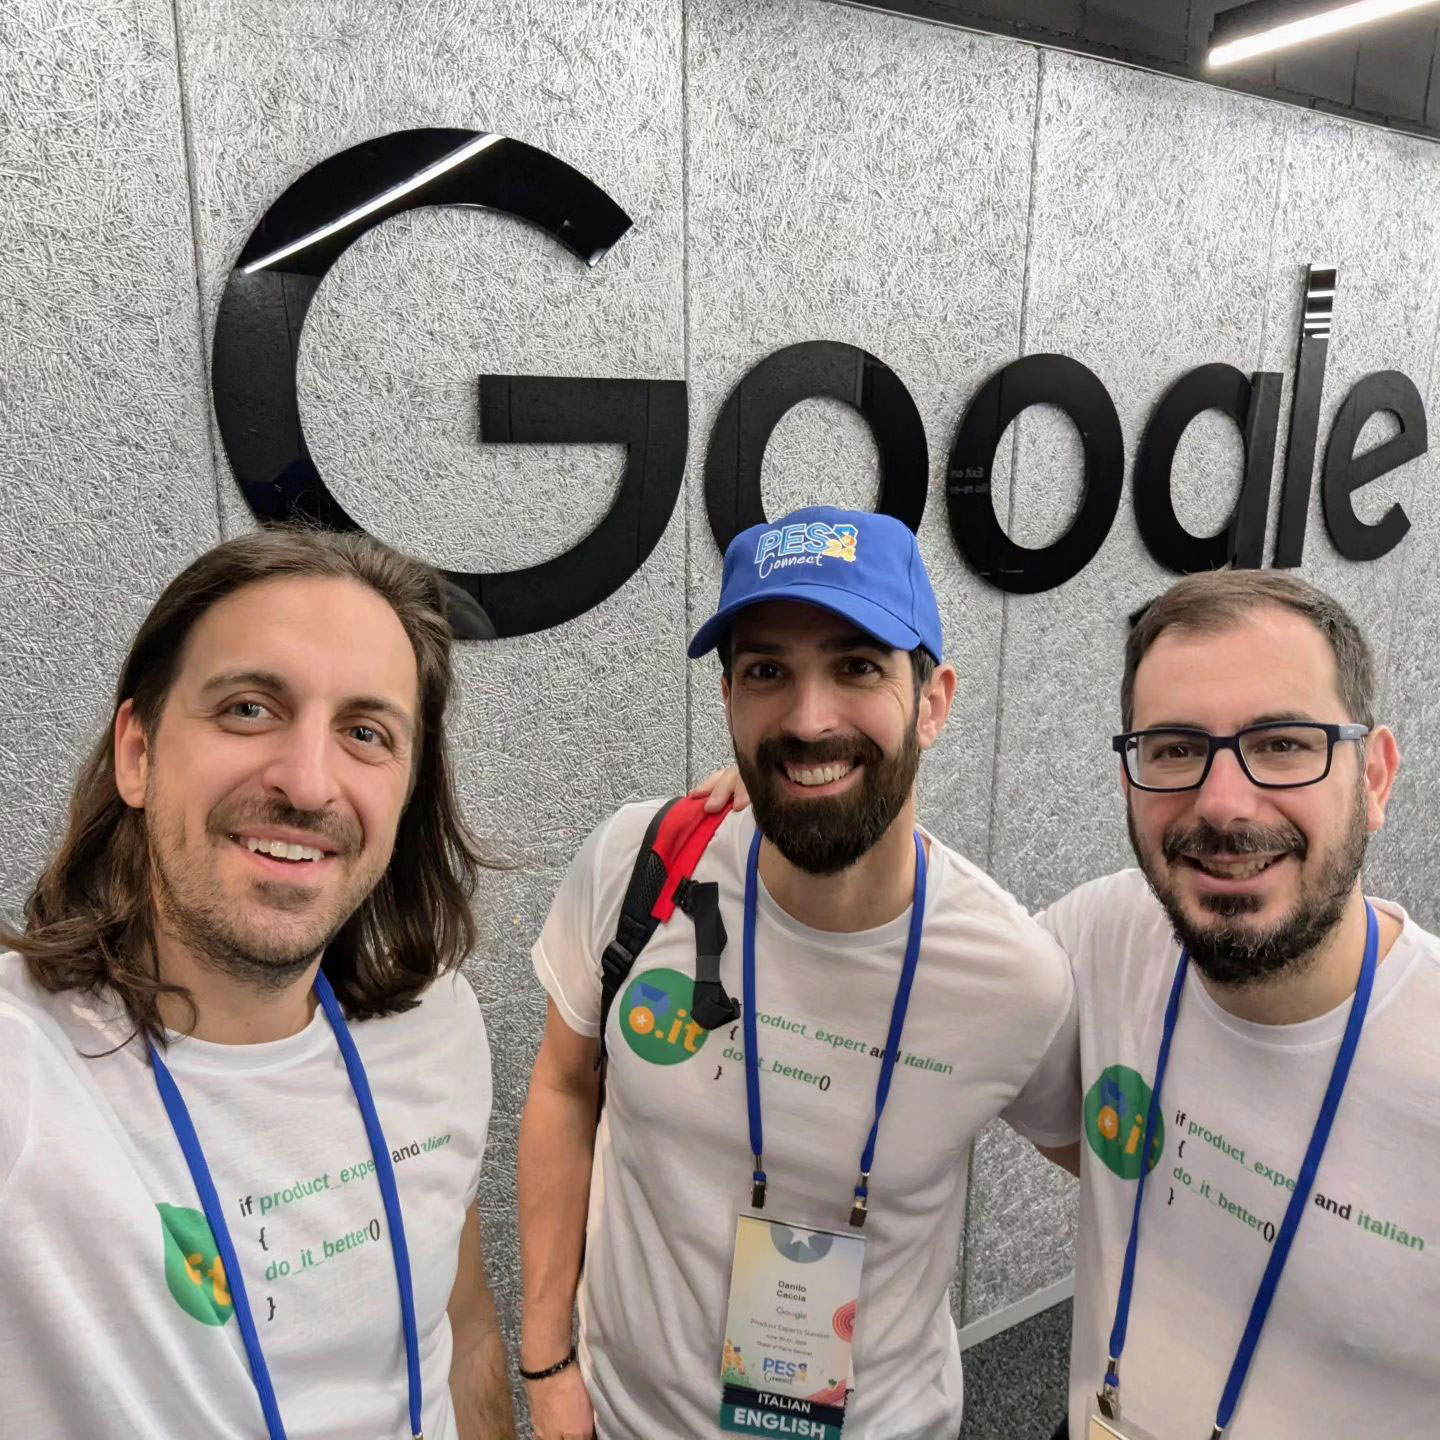 Google Product Expert Italian Code Shirts